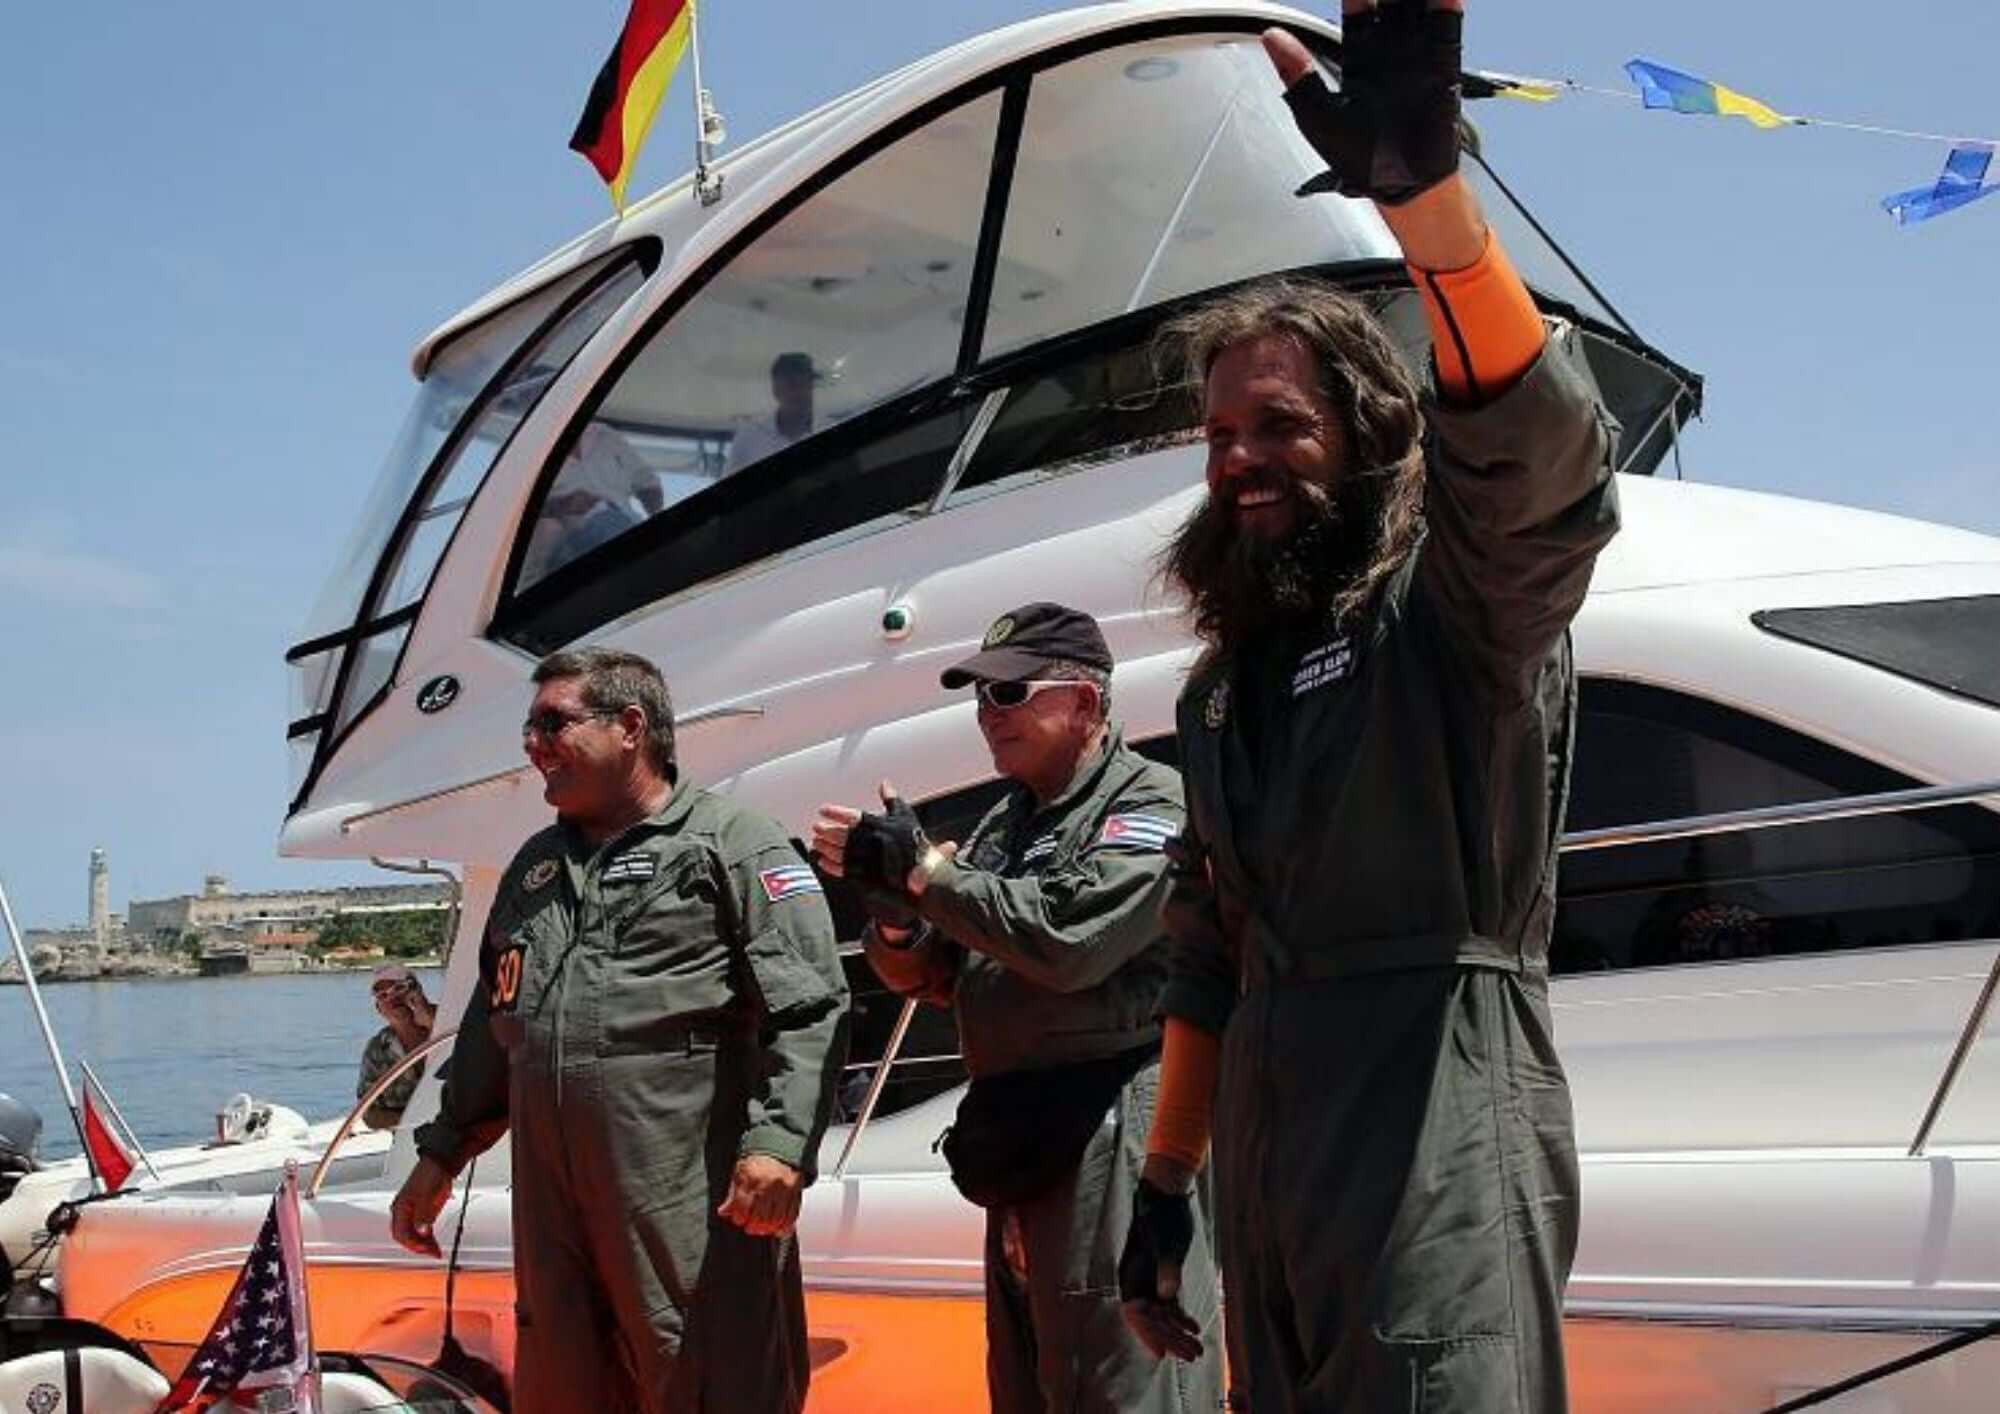 On the way to Düsseldorf: Roger Klüh's Apache Star leaves Cuba